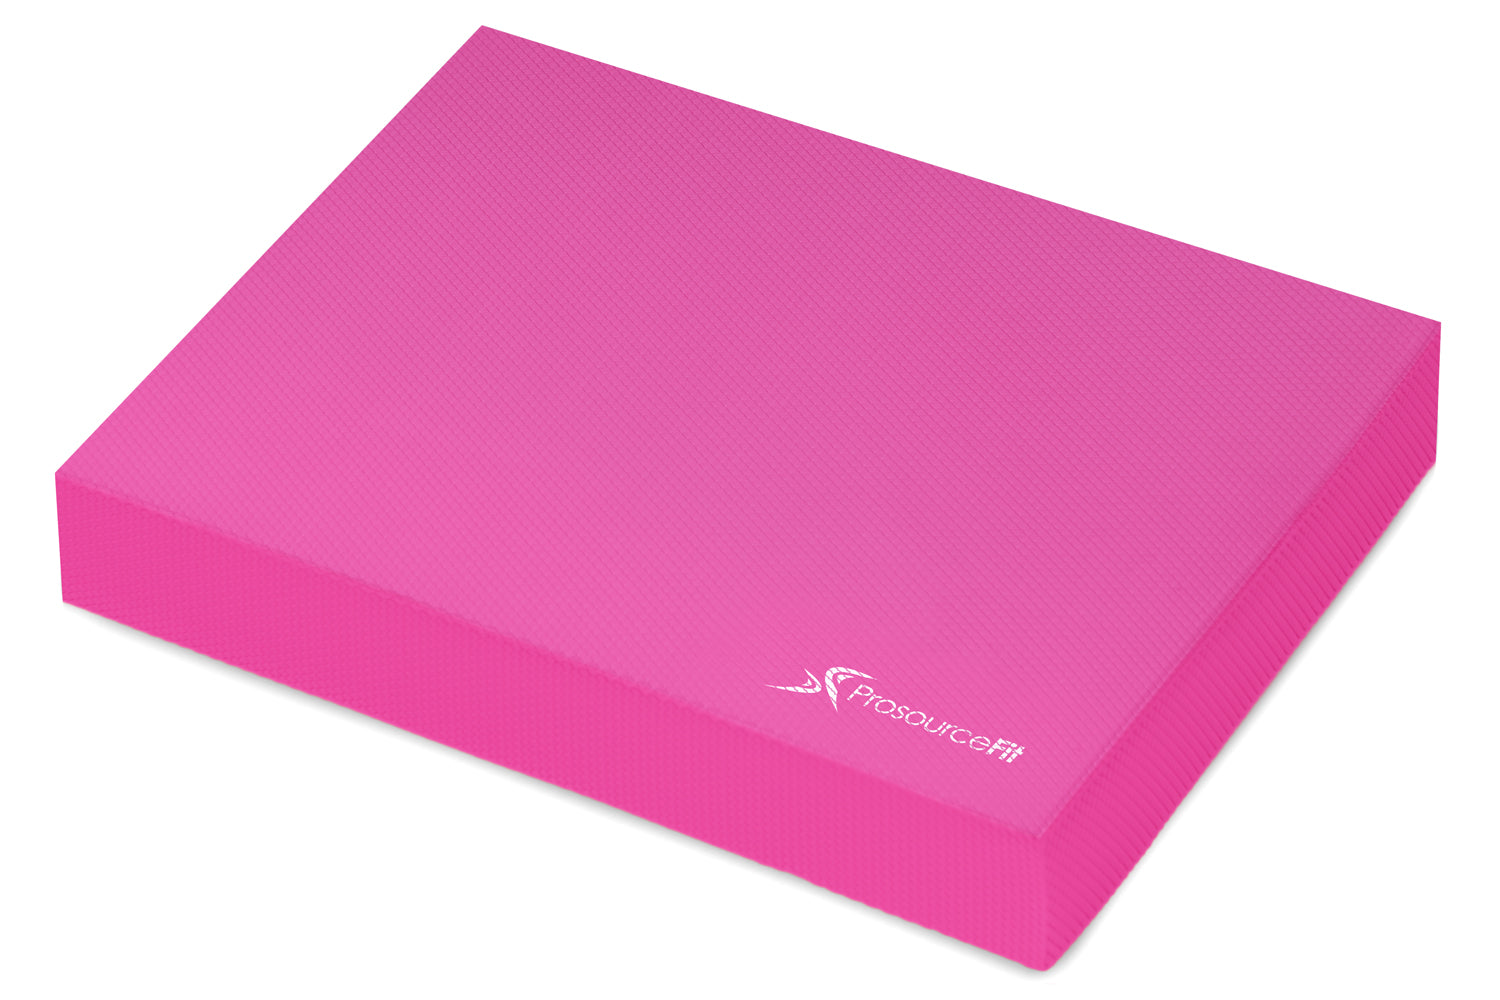 Pink Exercise Balance Pad